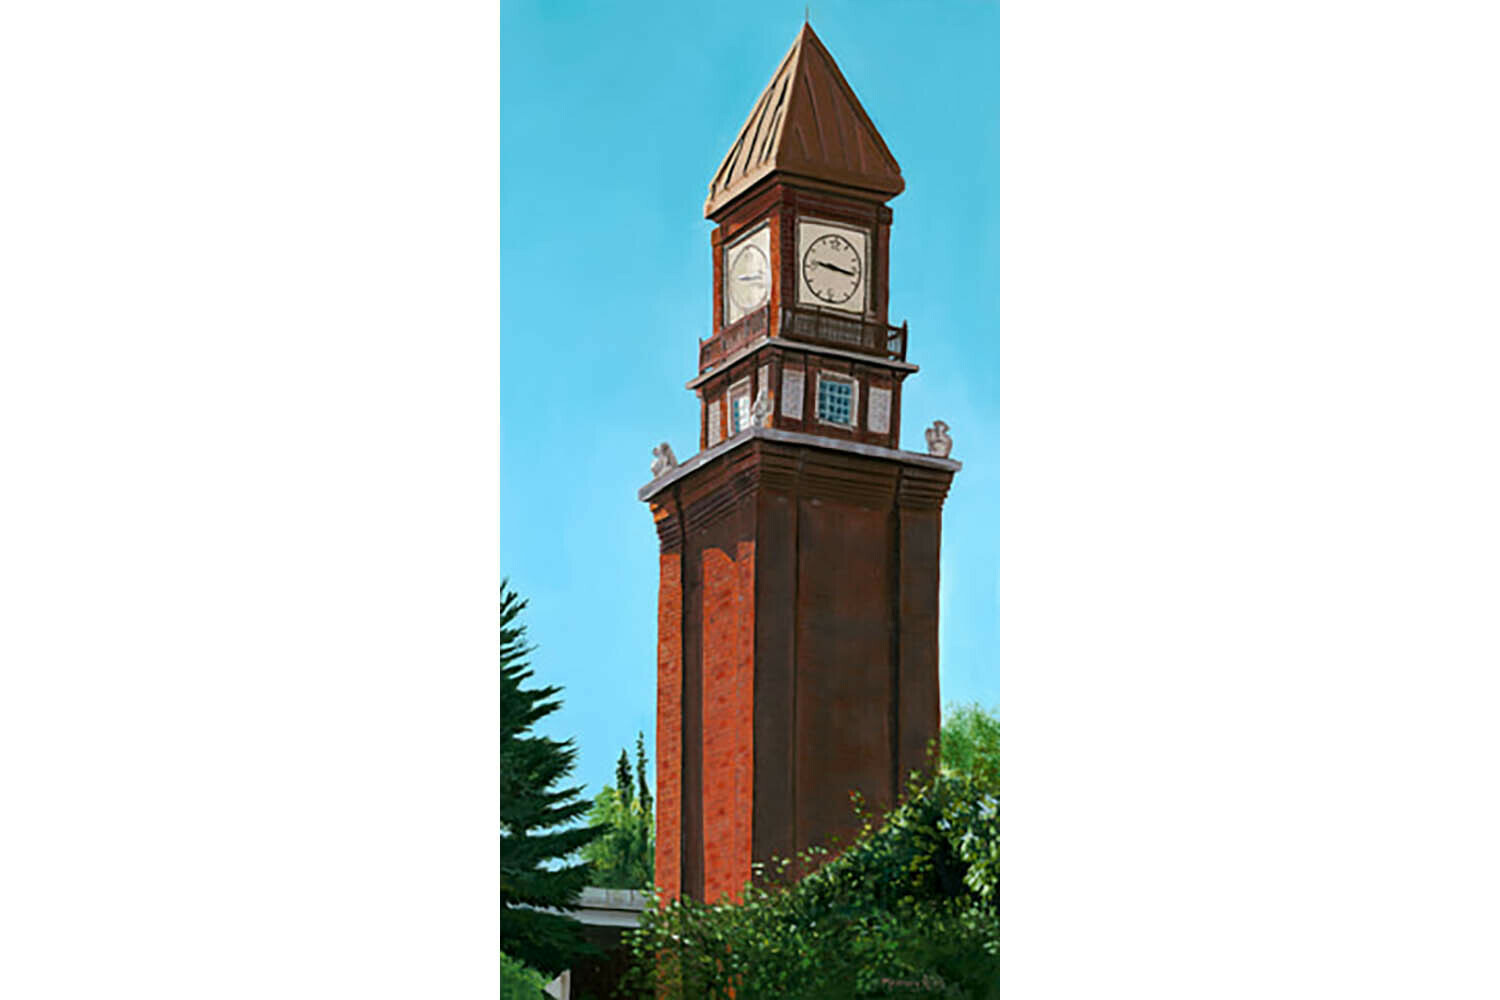 Perron St. Clock Tower - 3